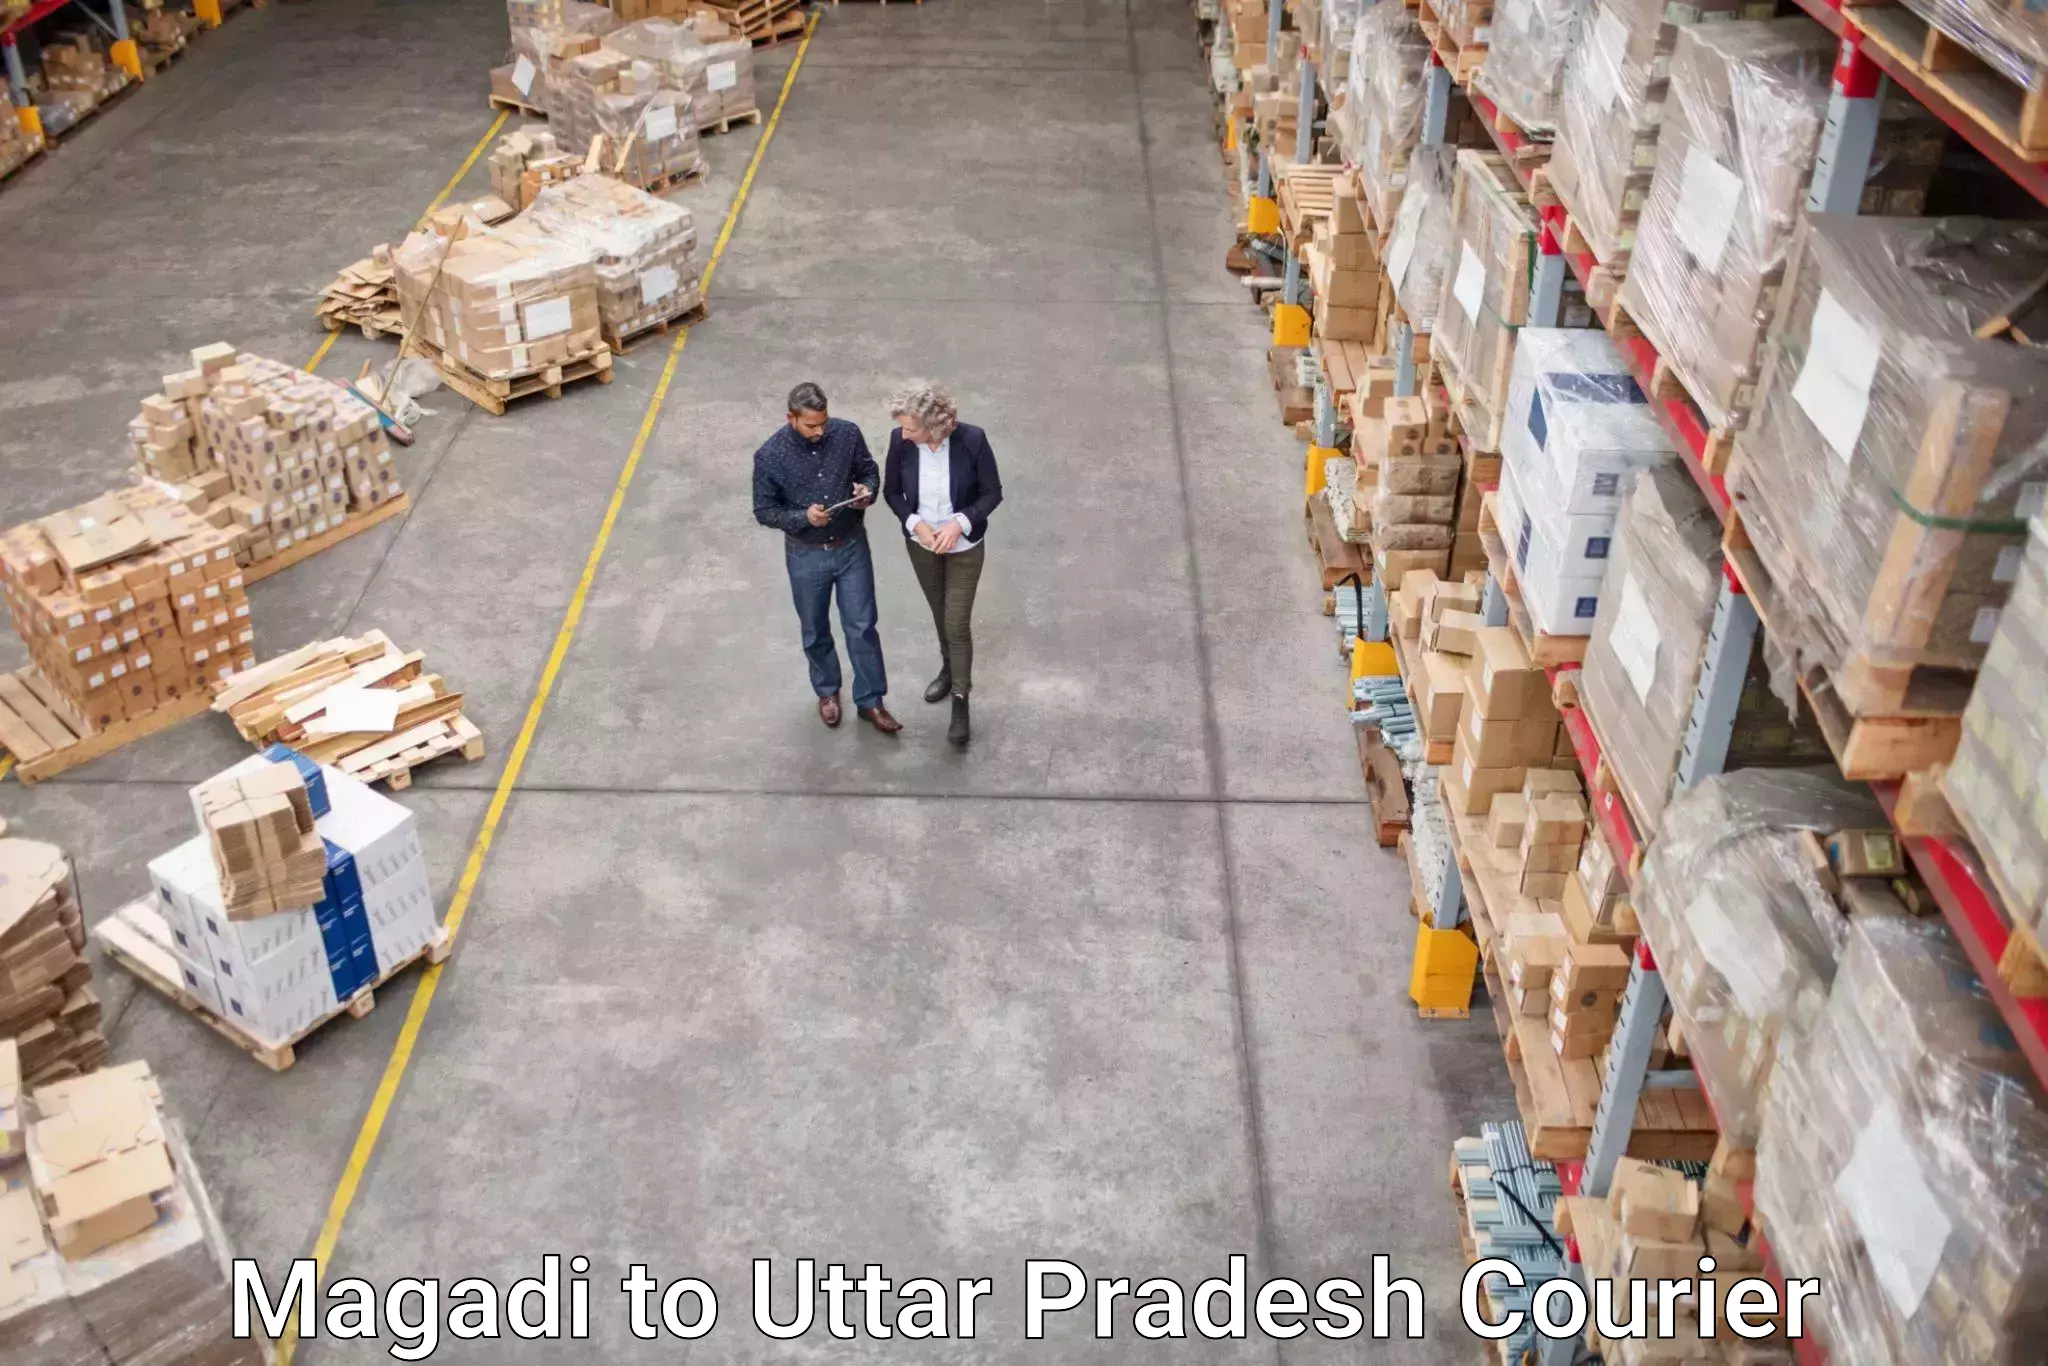 High-priority parcel service Magadi to Uttar Pradesh